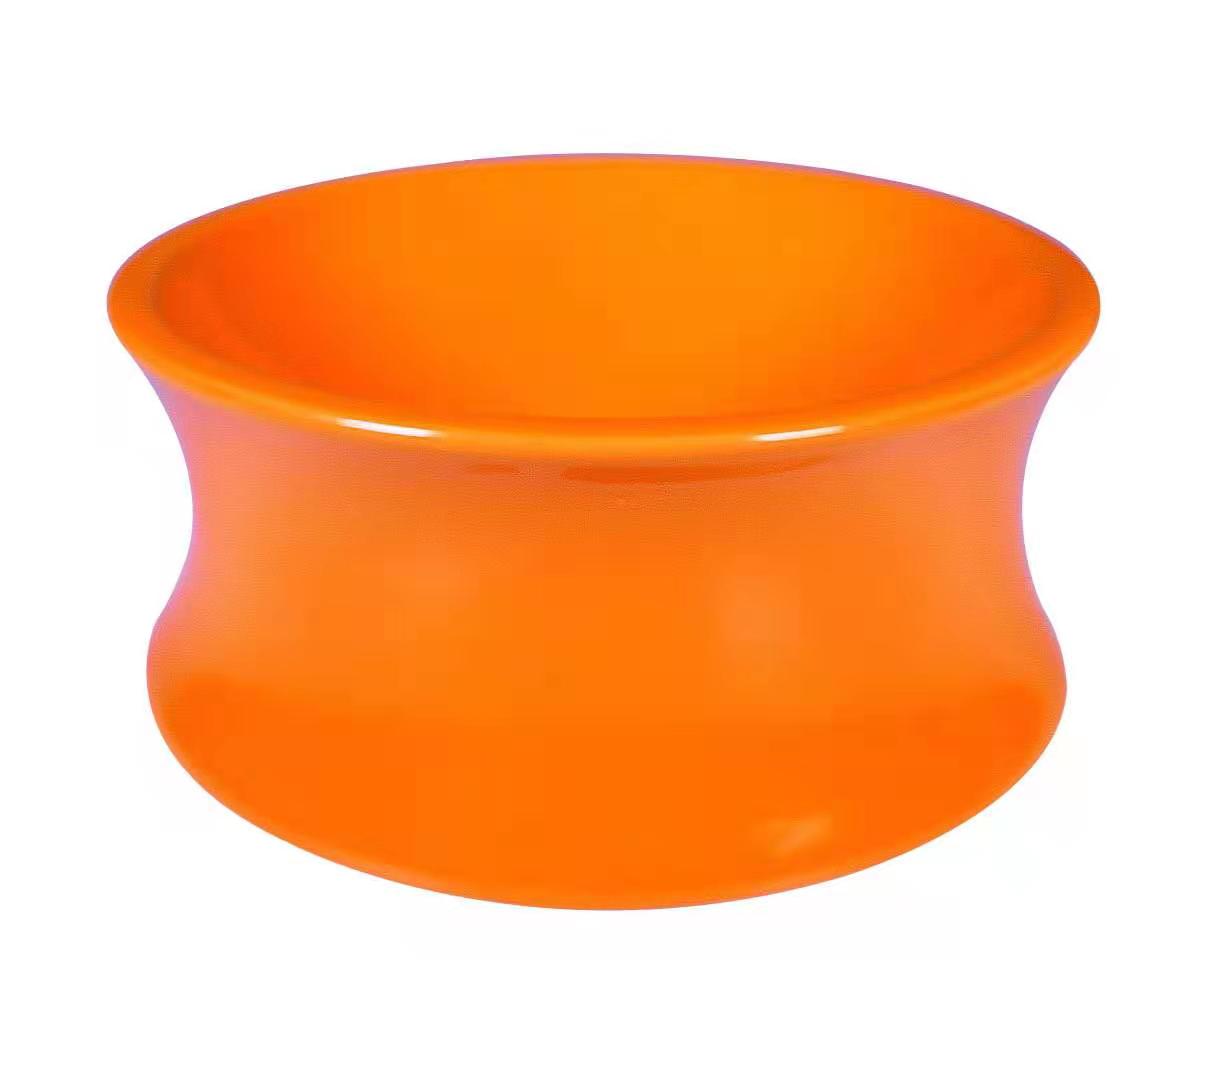 One for Pets - The Kurve Ceramic Pet Bowl